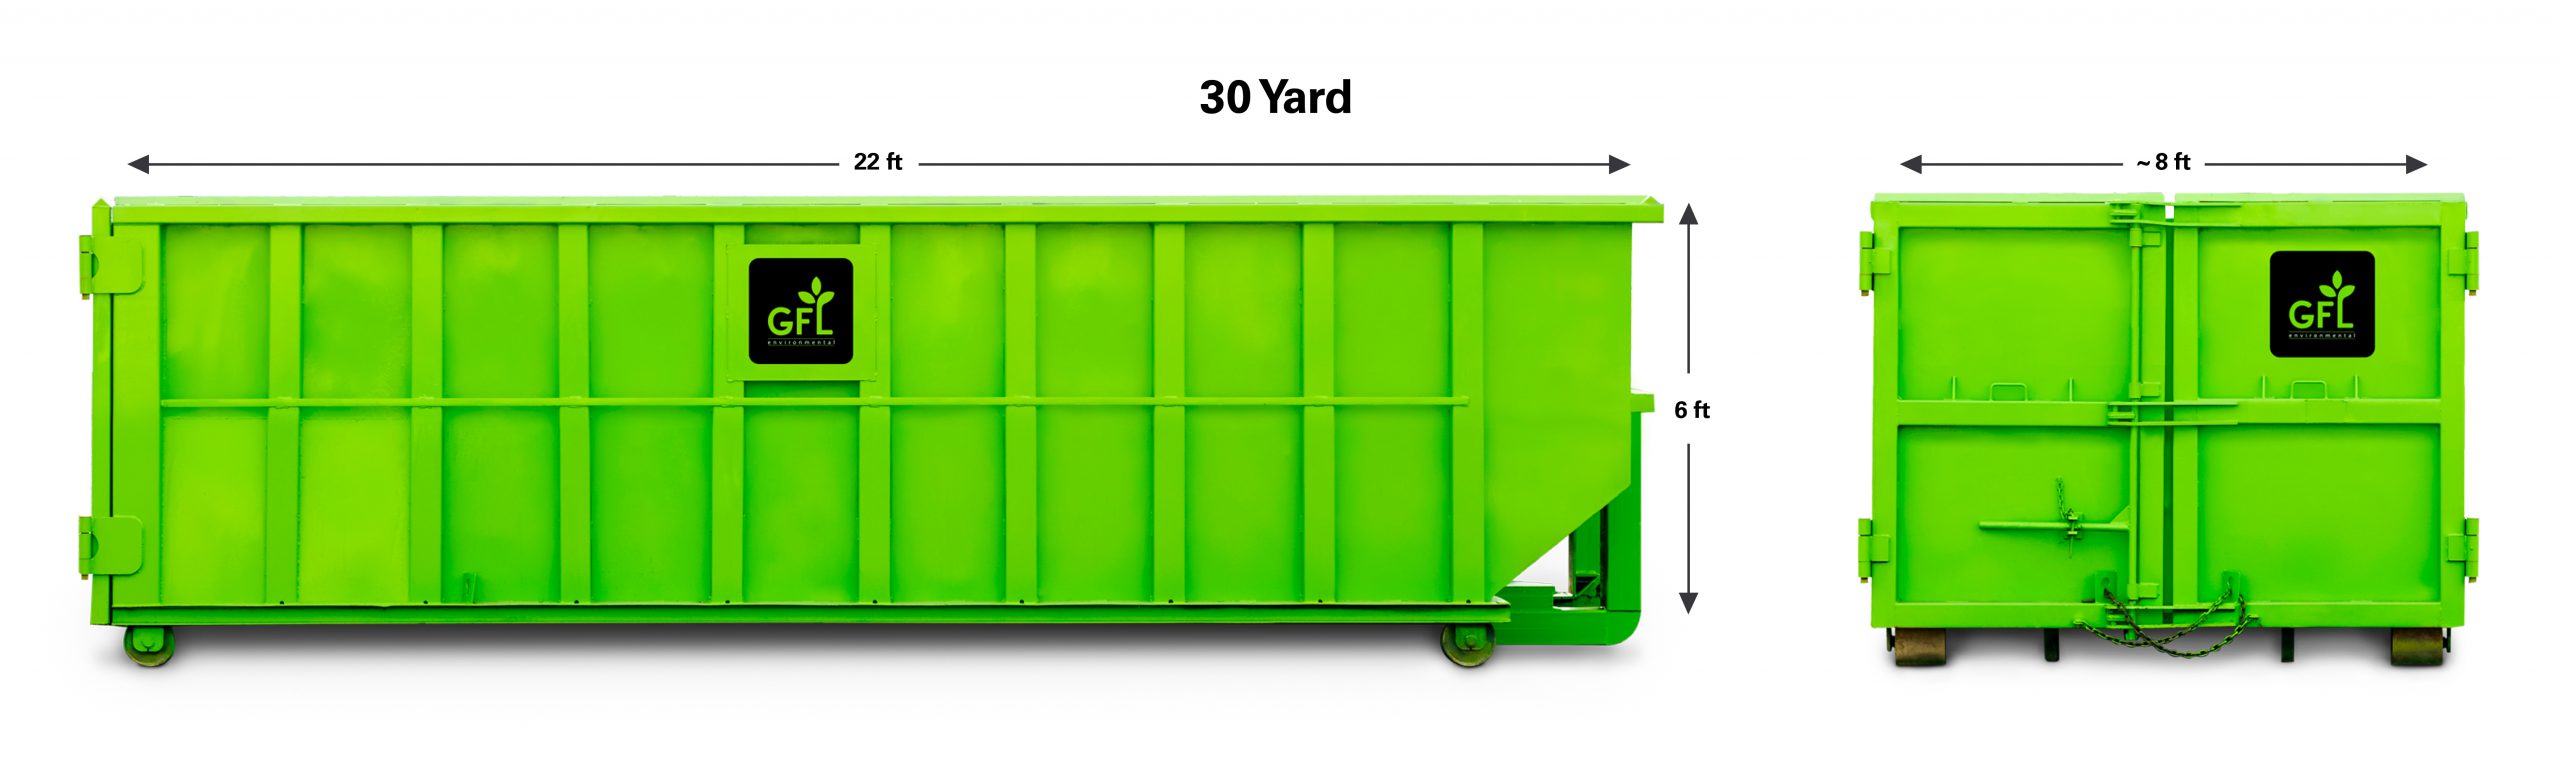 30 Yard Roll-off Dumpsters